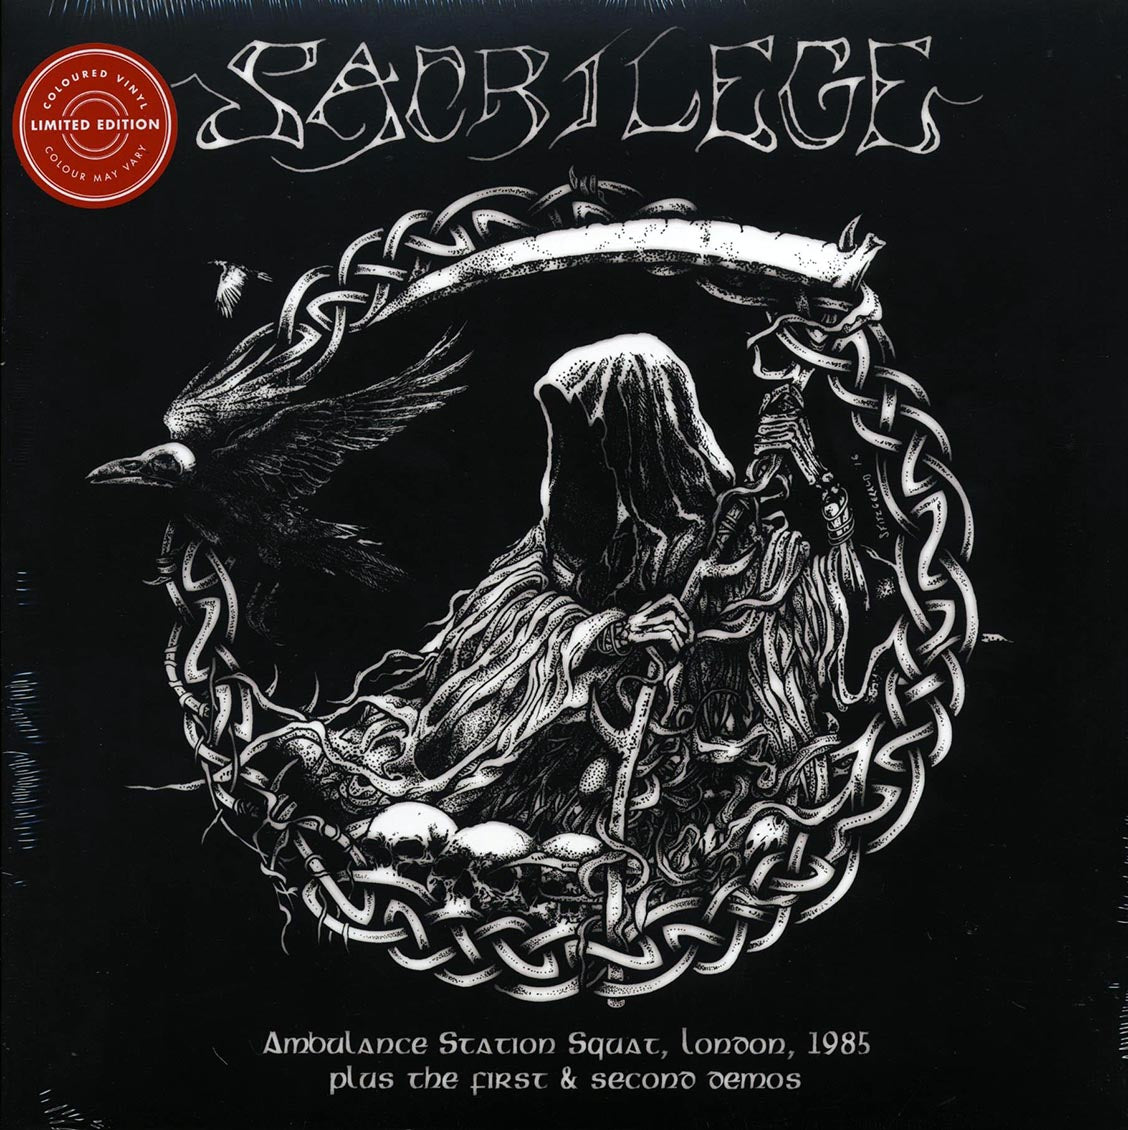 Sacrilege - Ambulance Station Squat, London, 1985 + The First & Second Demos (ltd. ed.) (splatter vinyl) - Vinyl LP